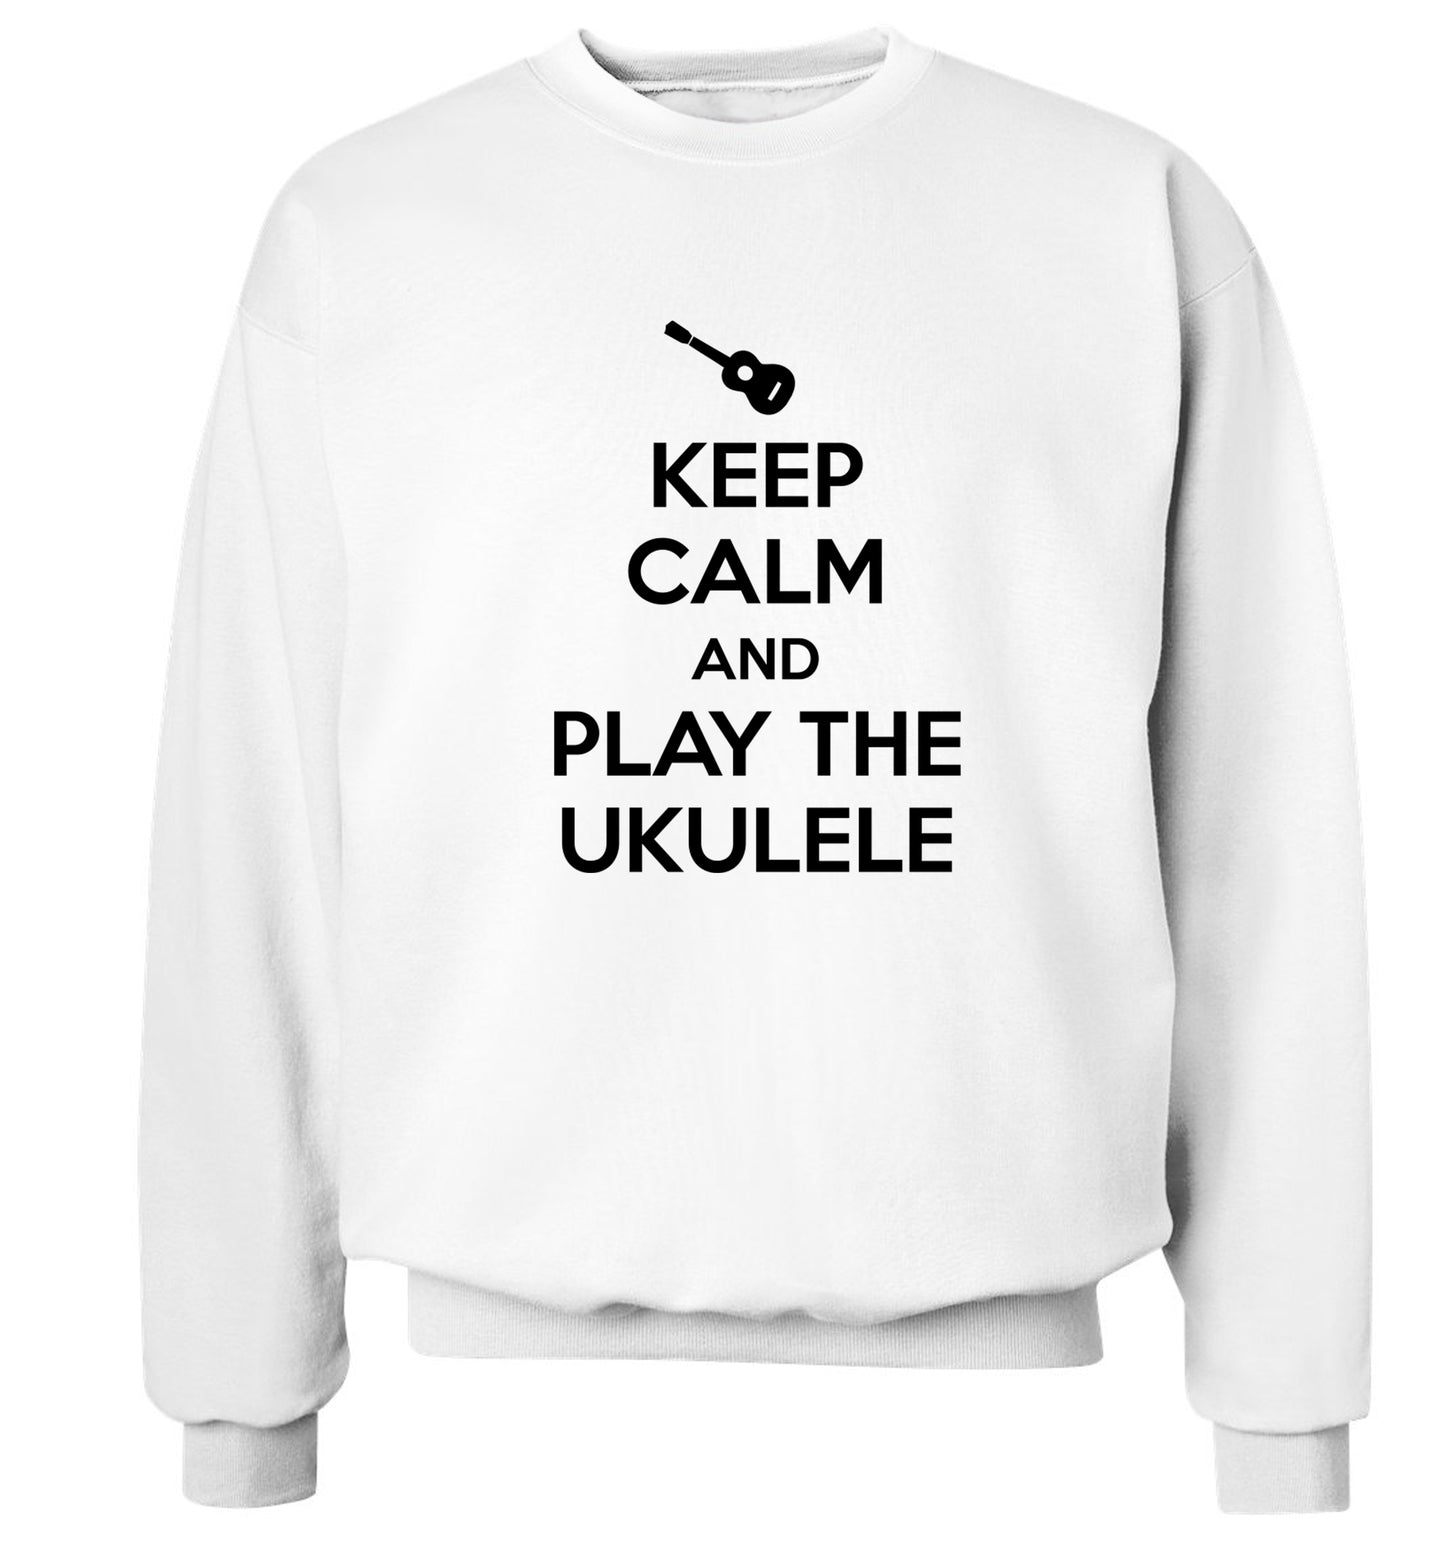 Keep calm and play the ukulele Adult's unisex white Sweater 2XL